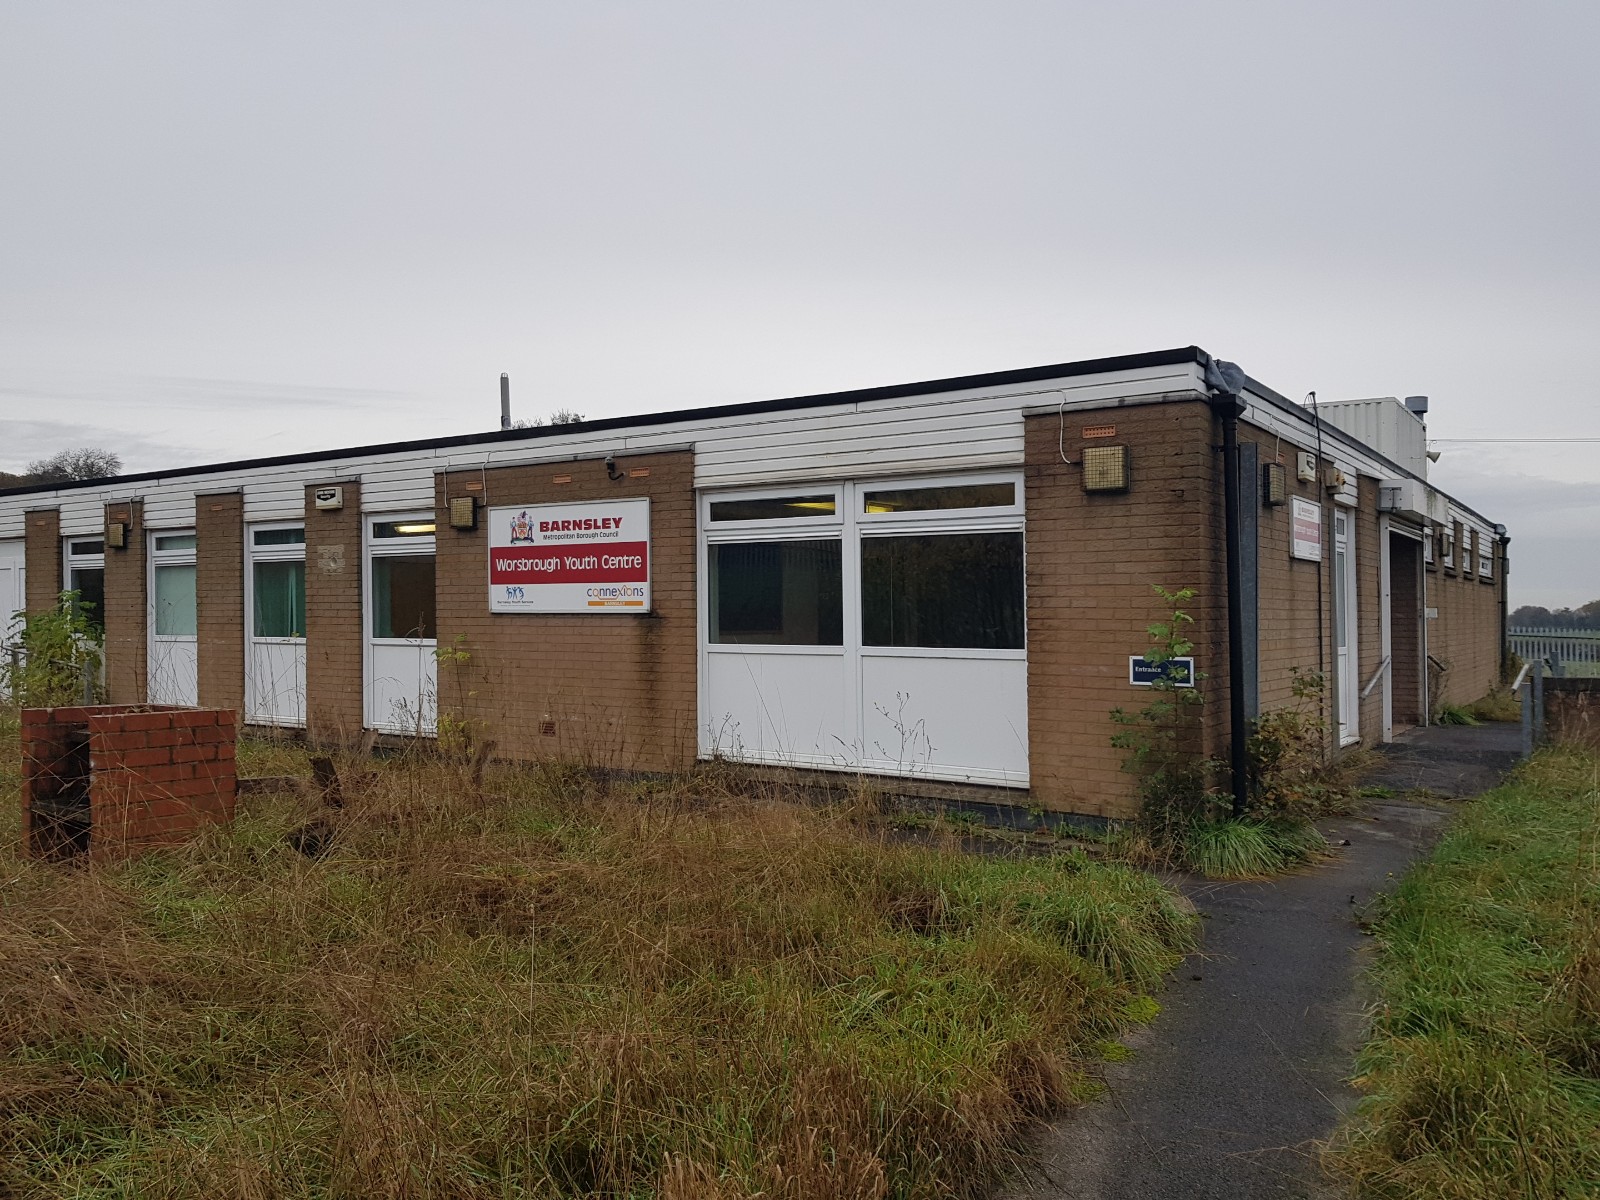 Asbestos Refurbishment / Demolition Survey – Worsborough Youth Centre, Barnsley, Yorkshire